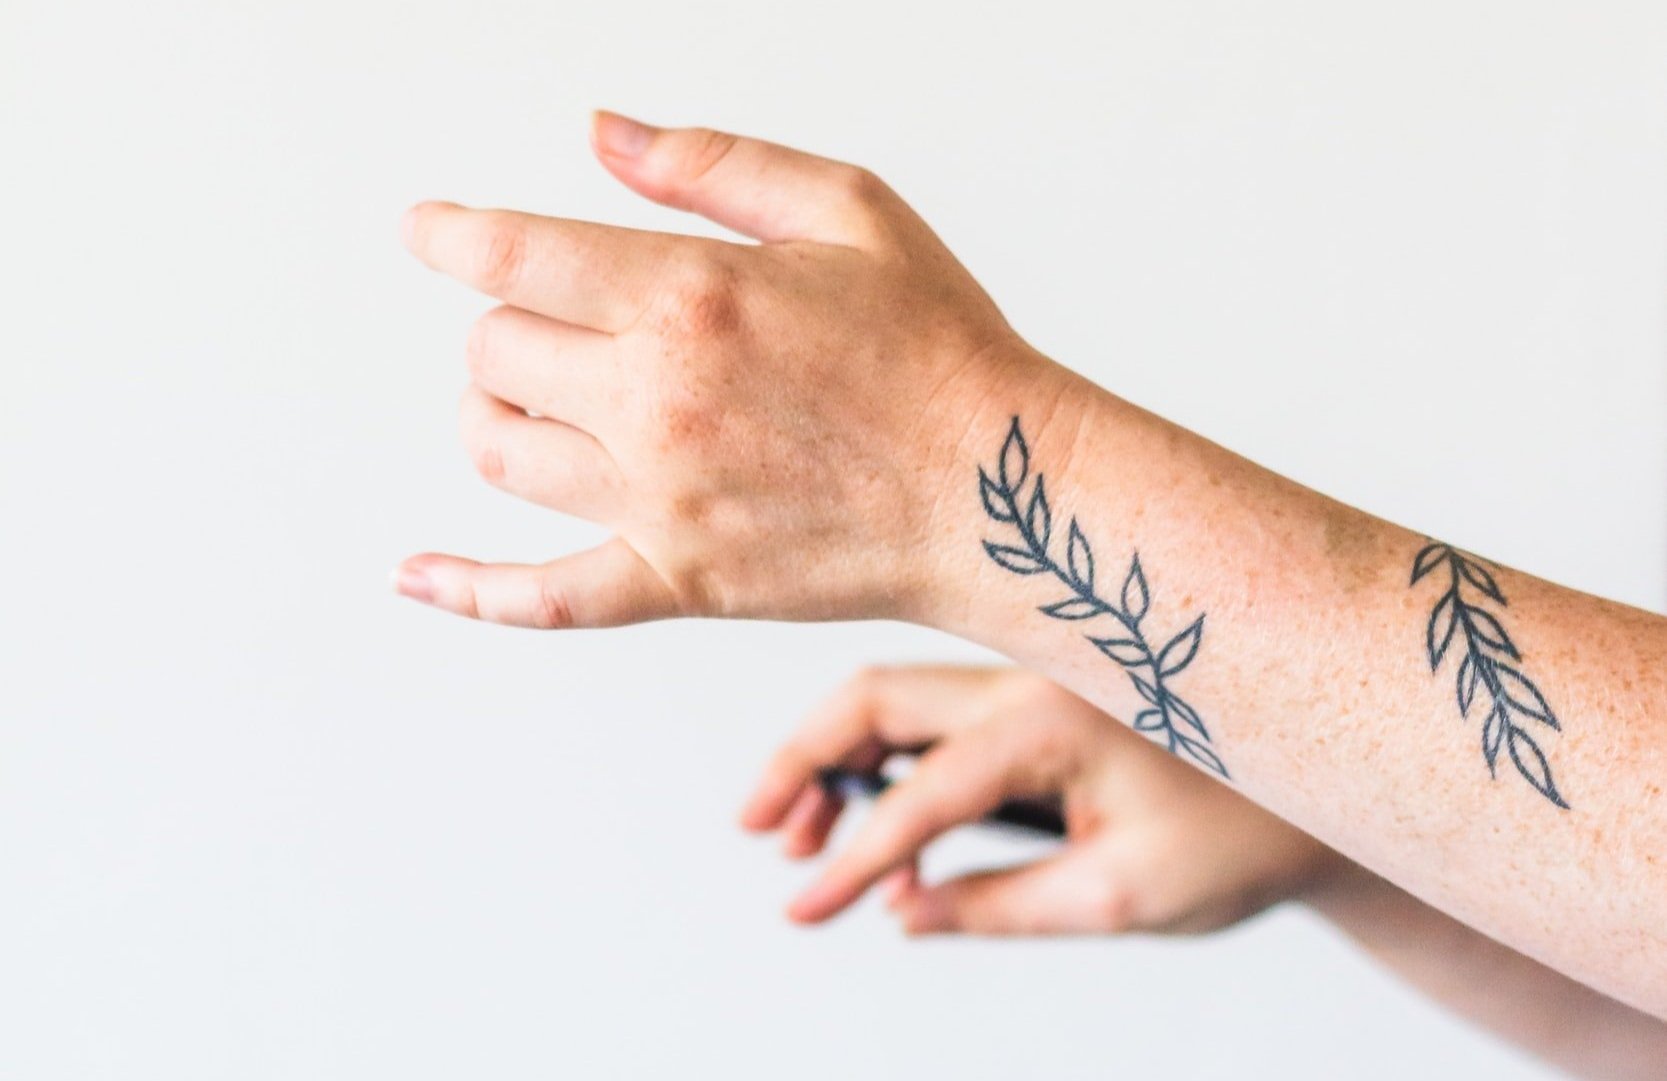 6 memorial tattoos — Grief Collective